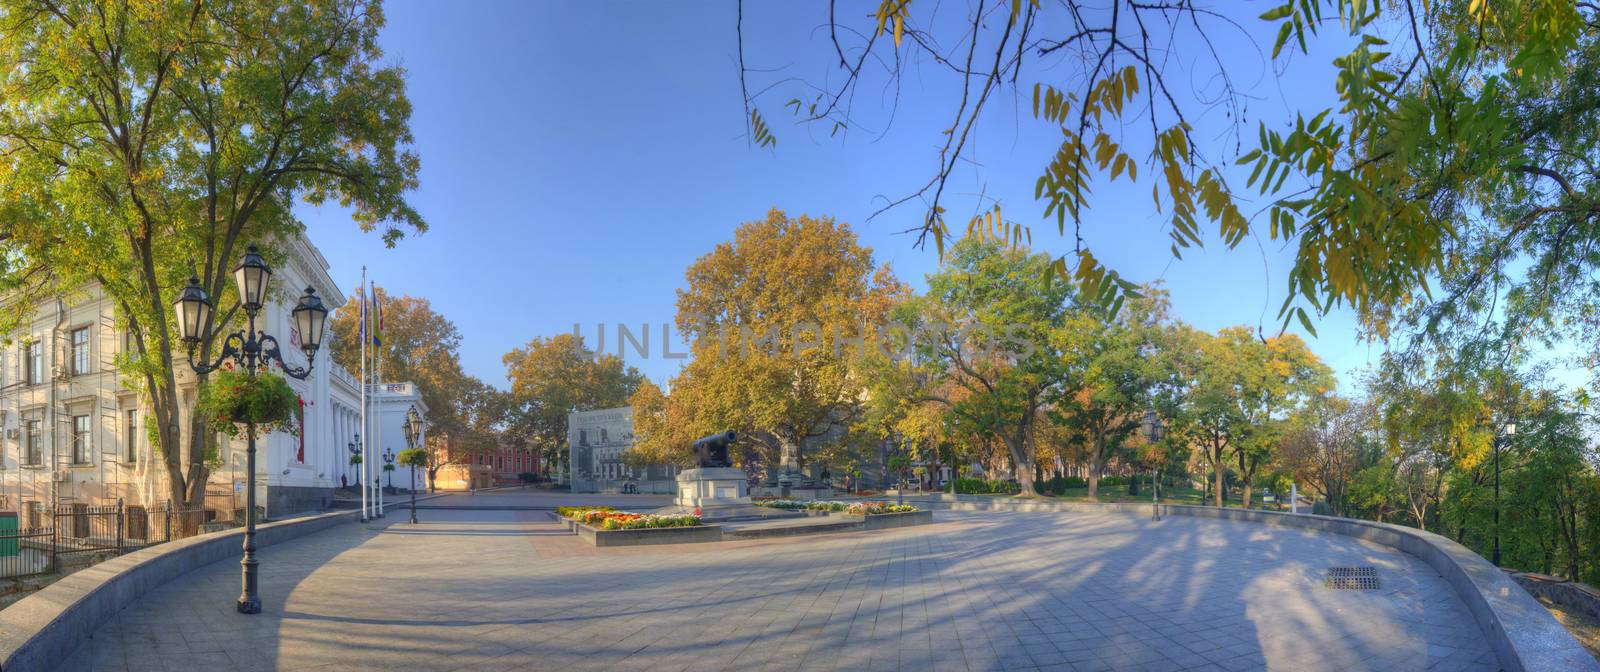 Primorsky Boulevard in Odessa at fall by Multipedia